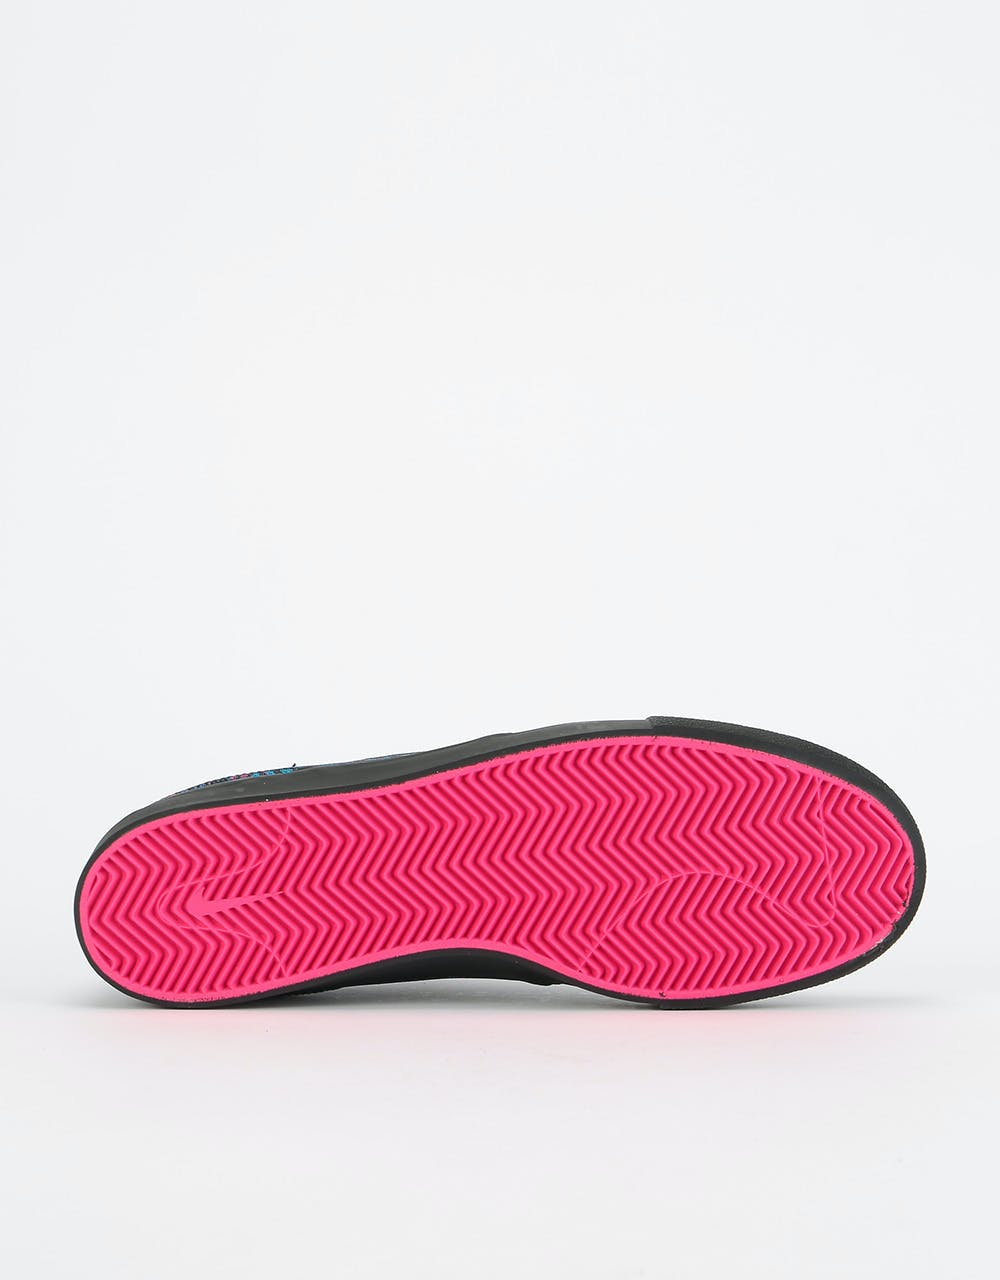 Nike SB Zoom Stefan Janoski Canvas RM Premium Skate Shoes - Watermelon